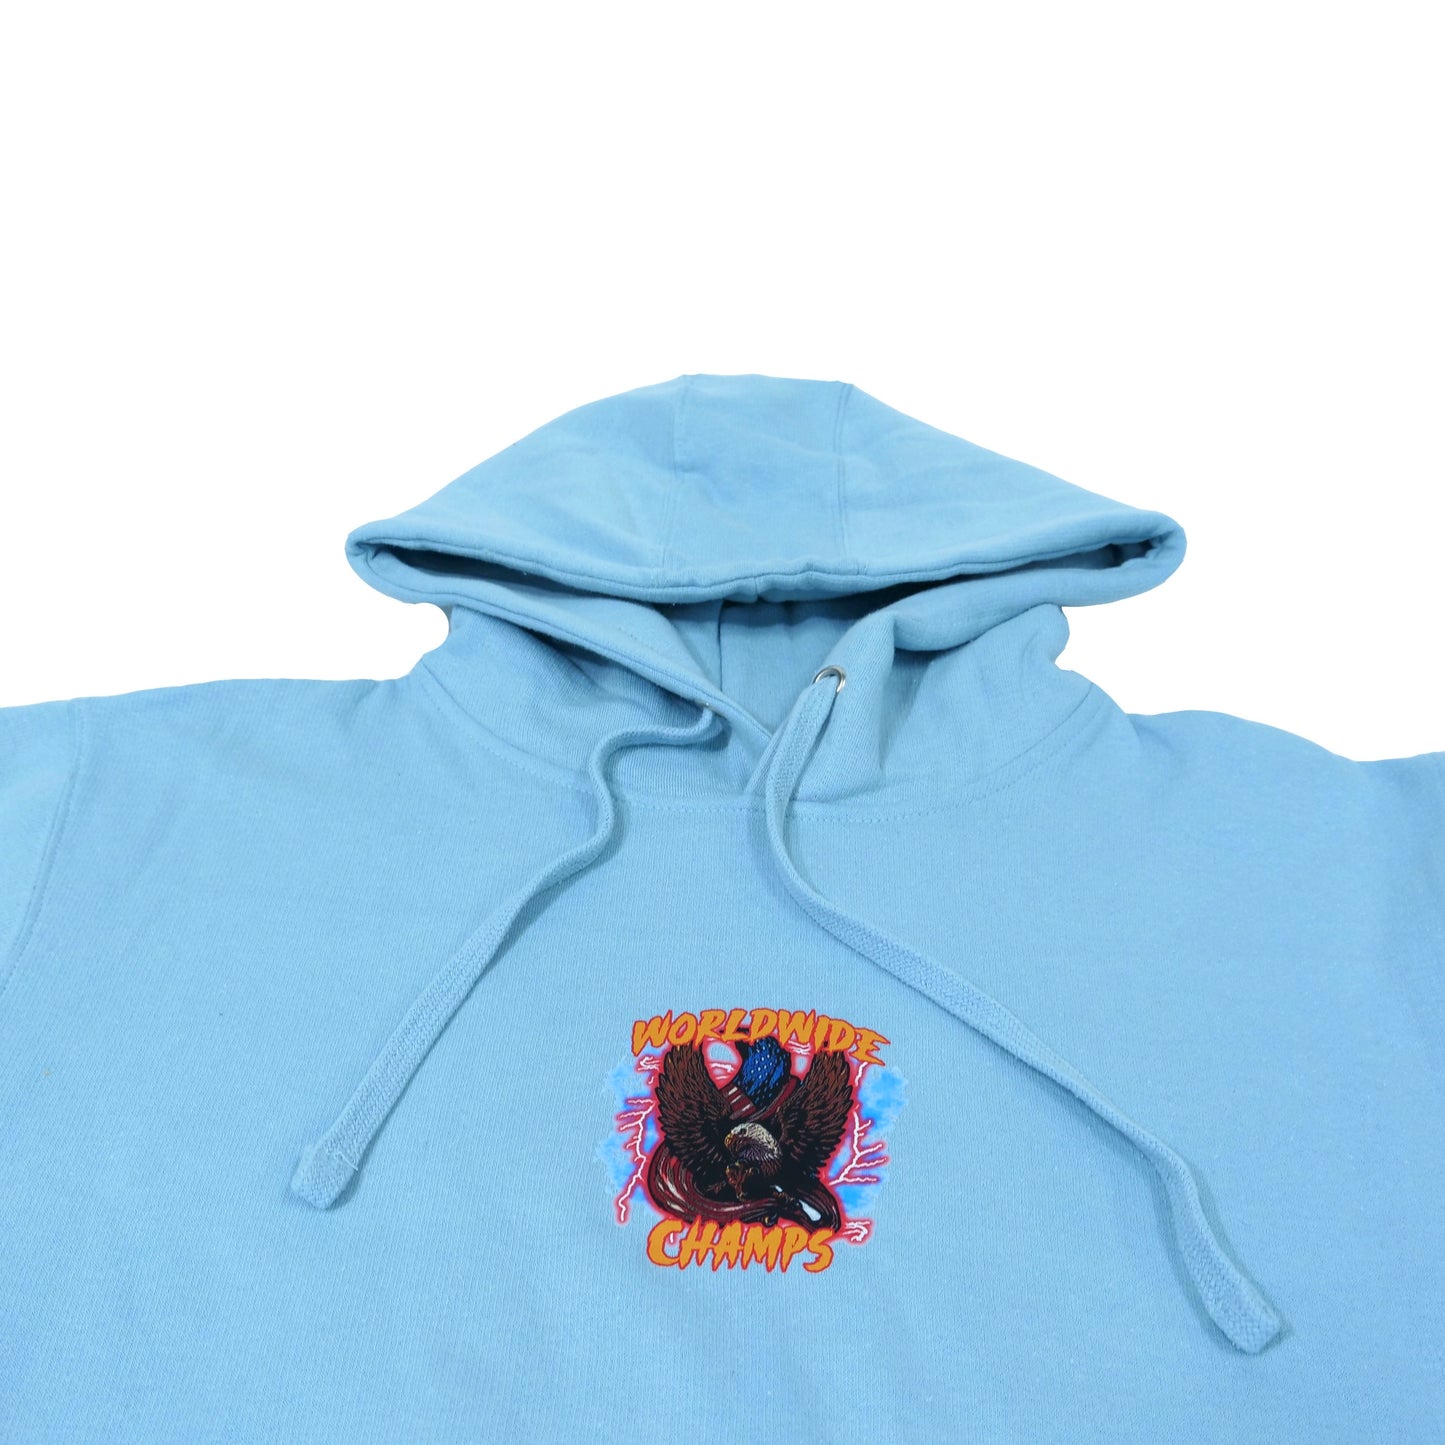 Worldwide Champs Baby Blue hoodie